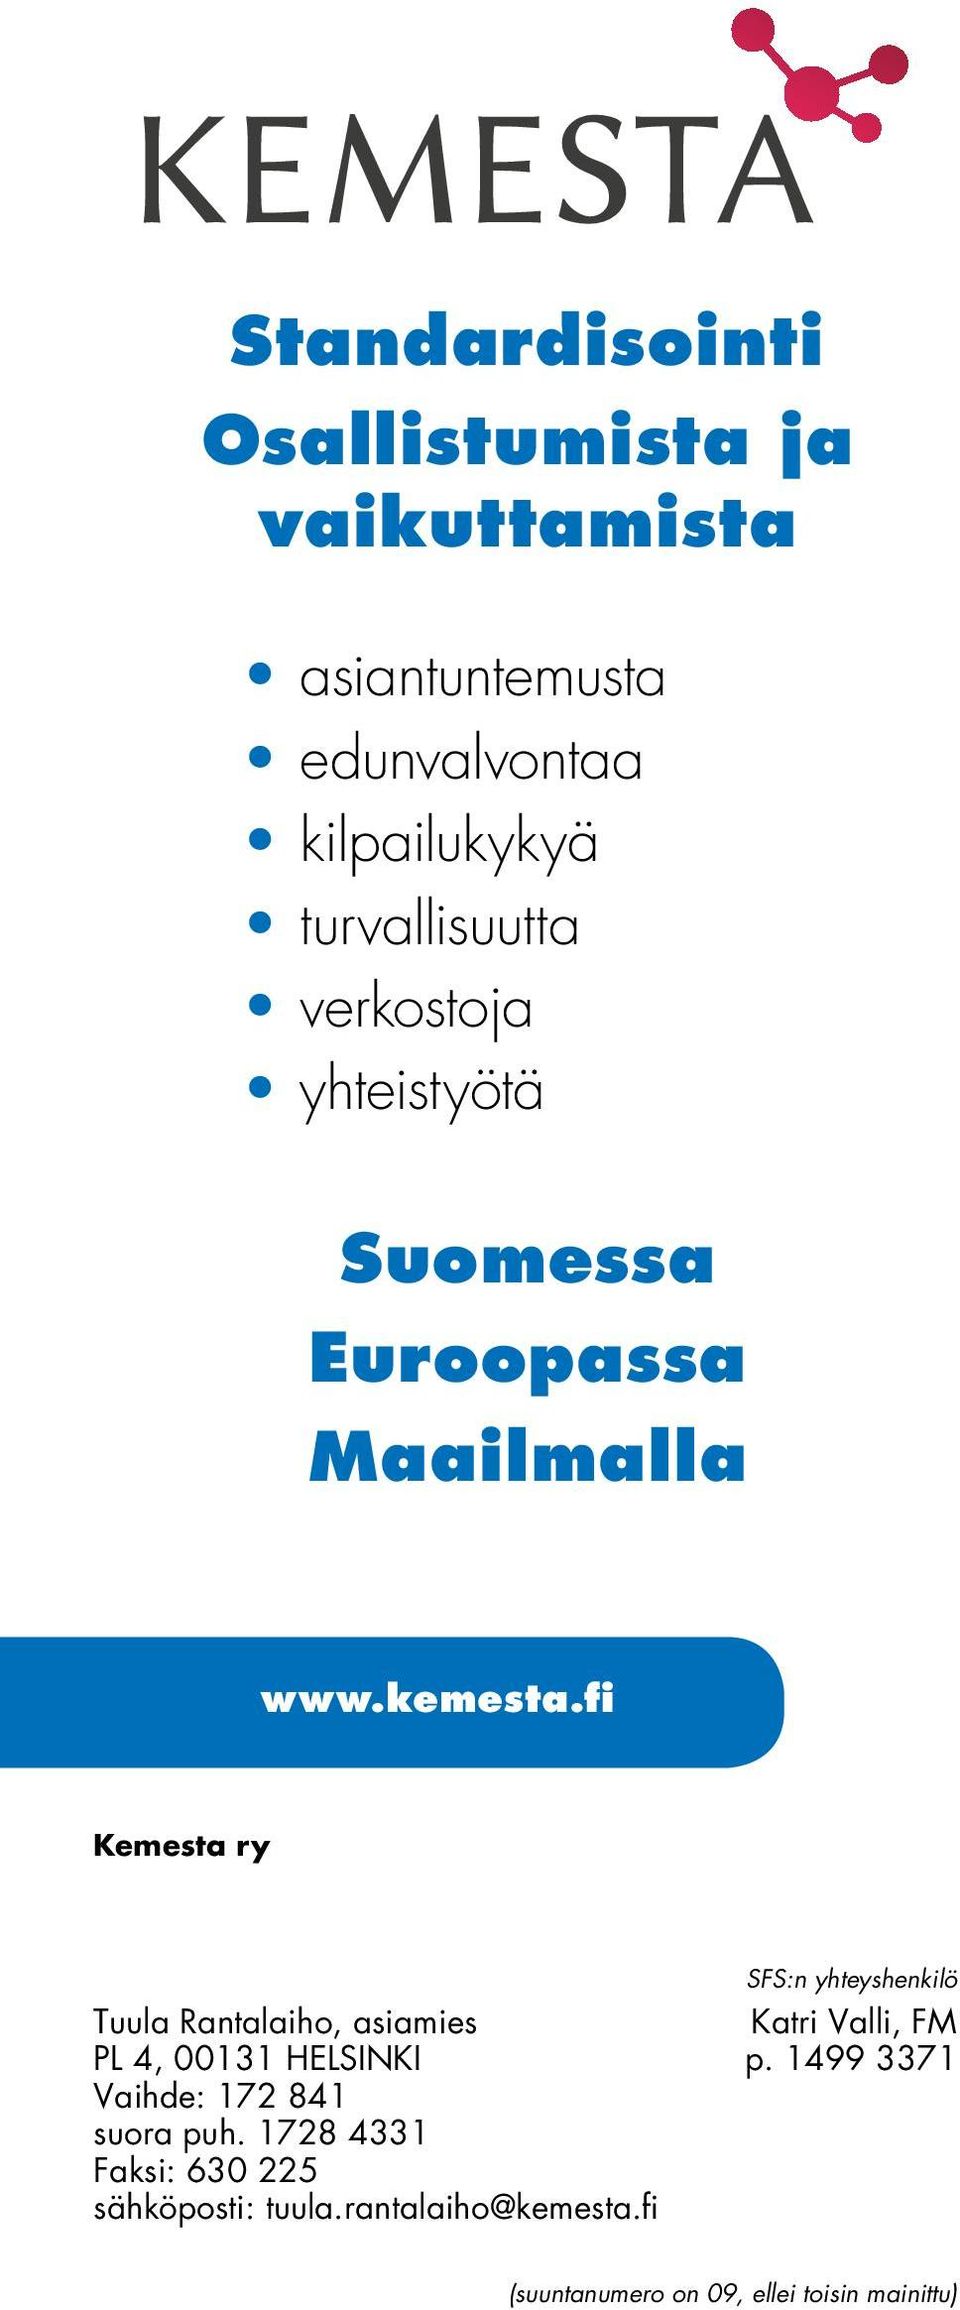 kemesta.fi Kemesta ry Tuula Rantalaiho, asiamies Katri Valli, FM PL 4, 00131 HELSINKI p.